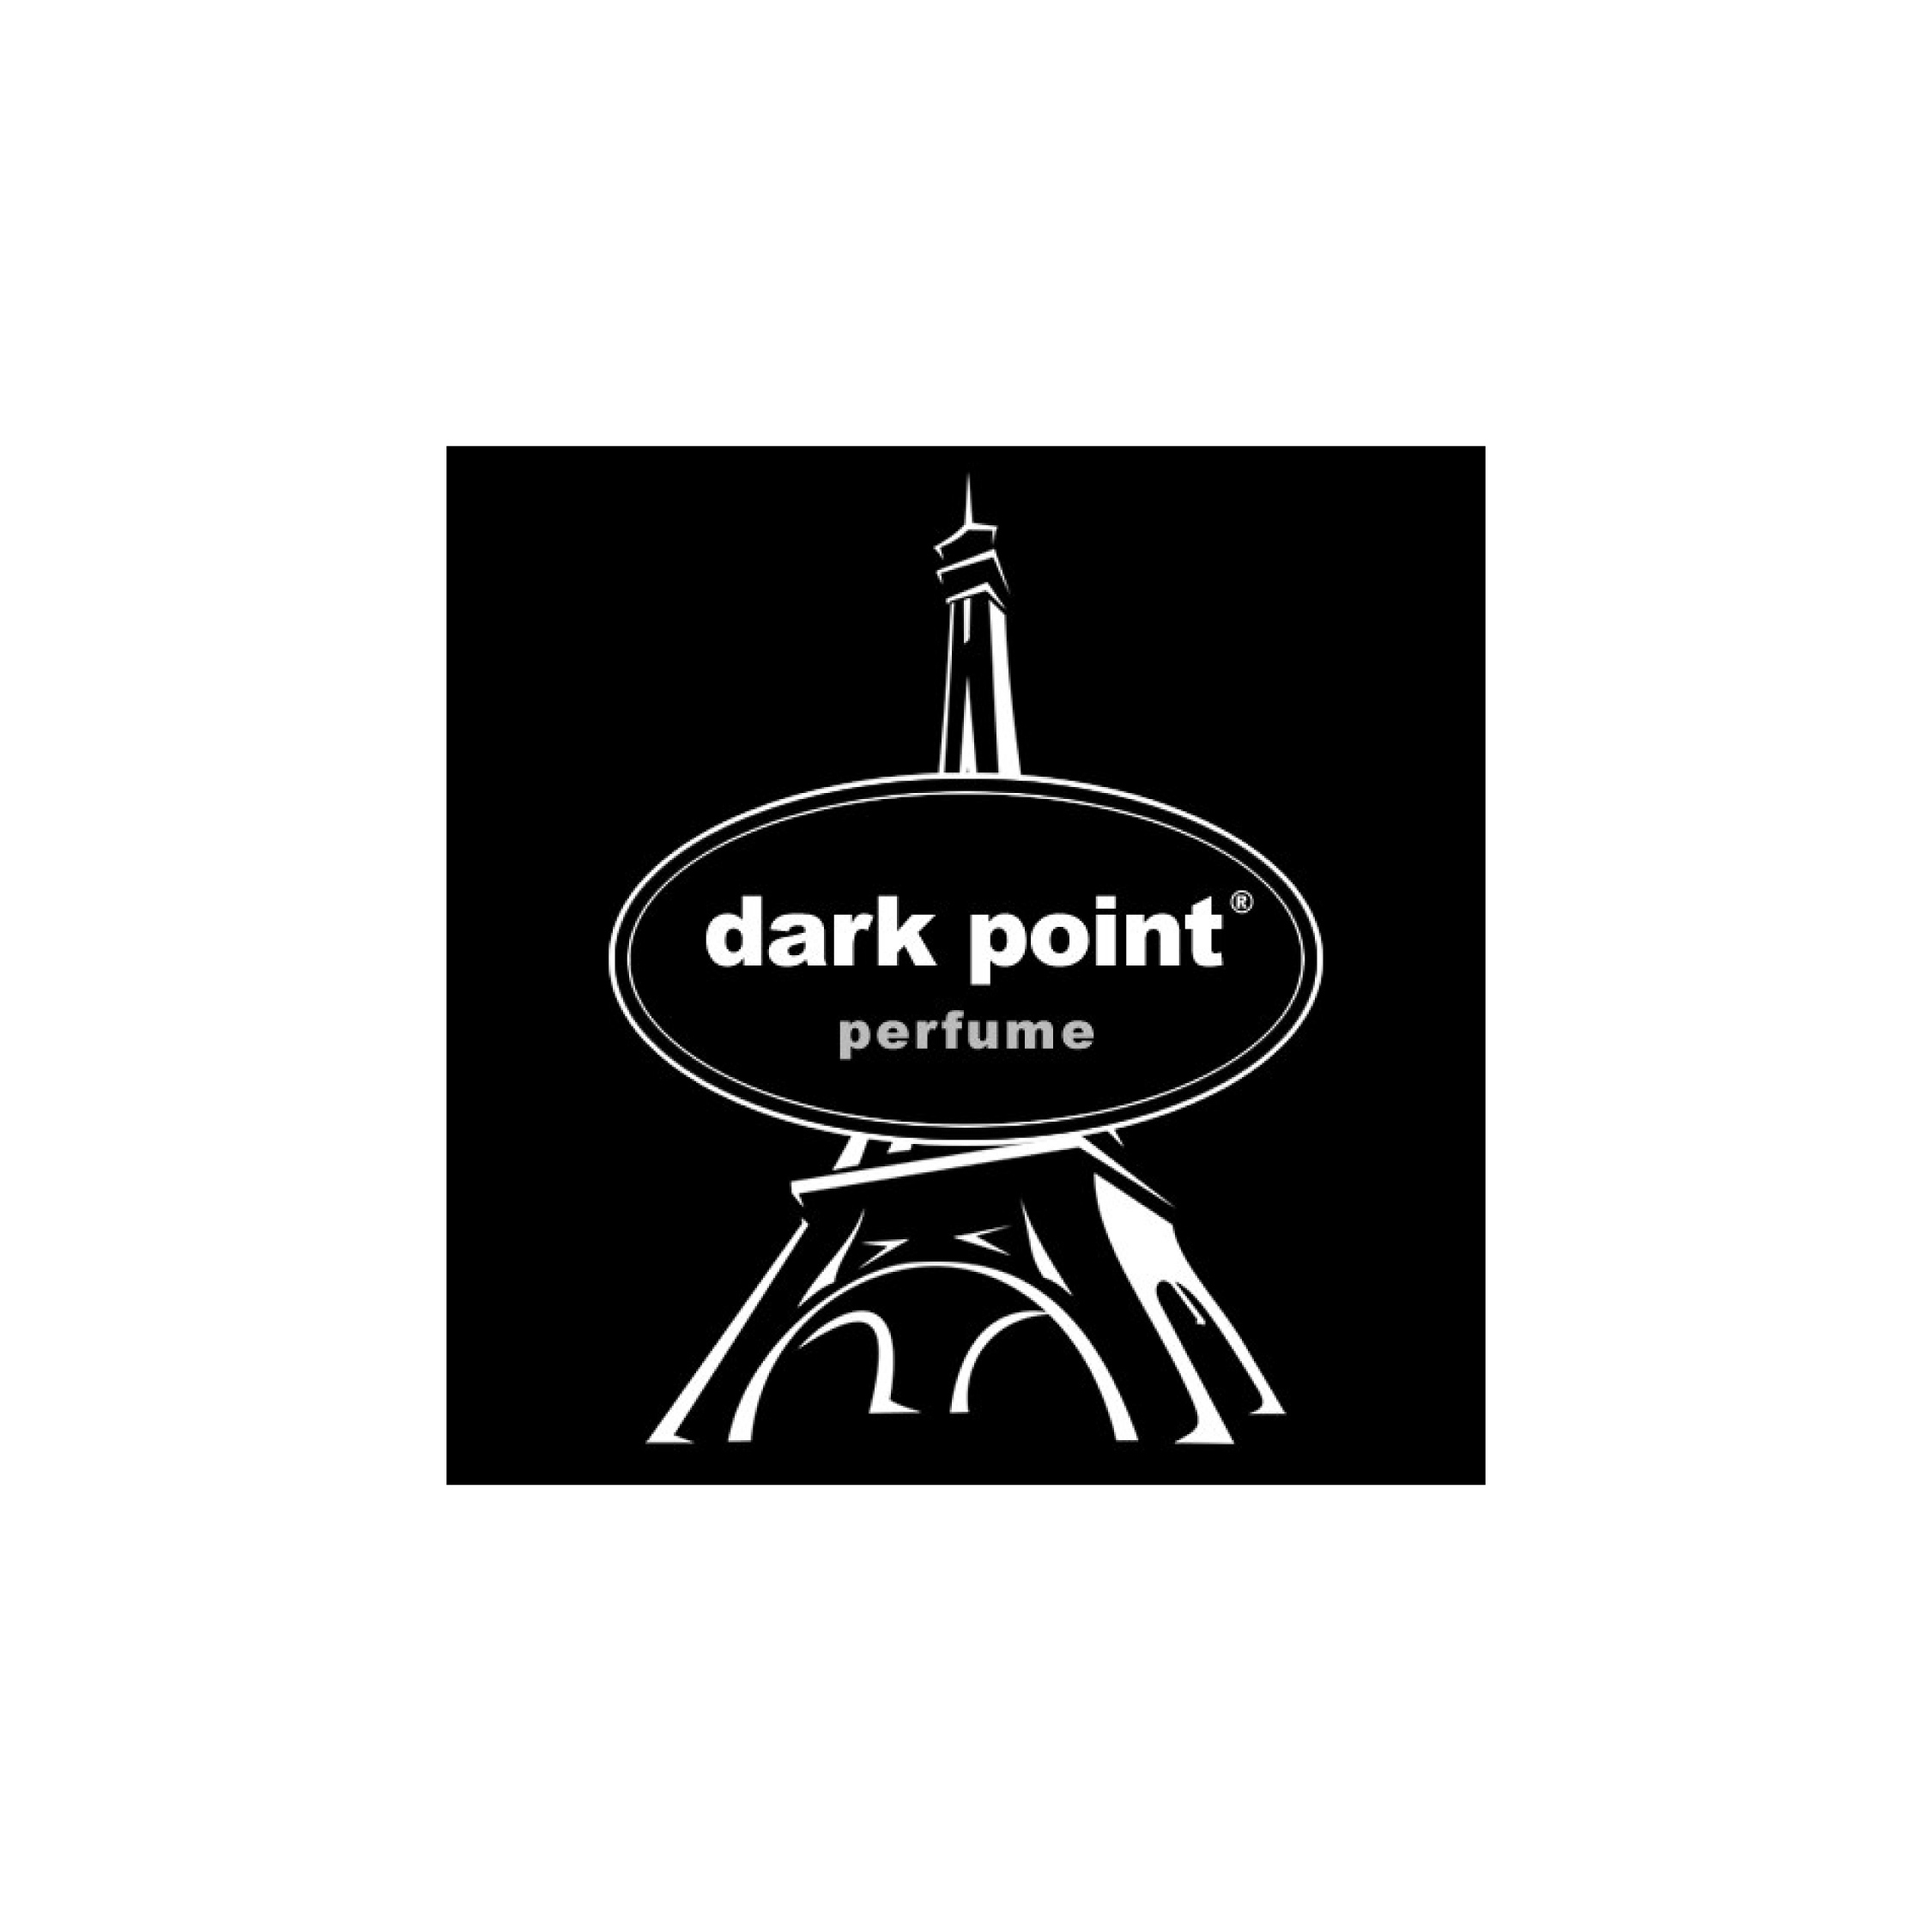 Dark and point